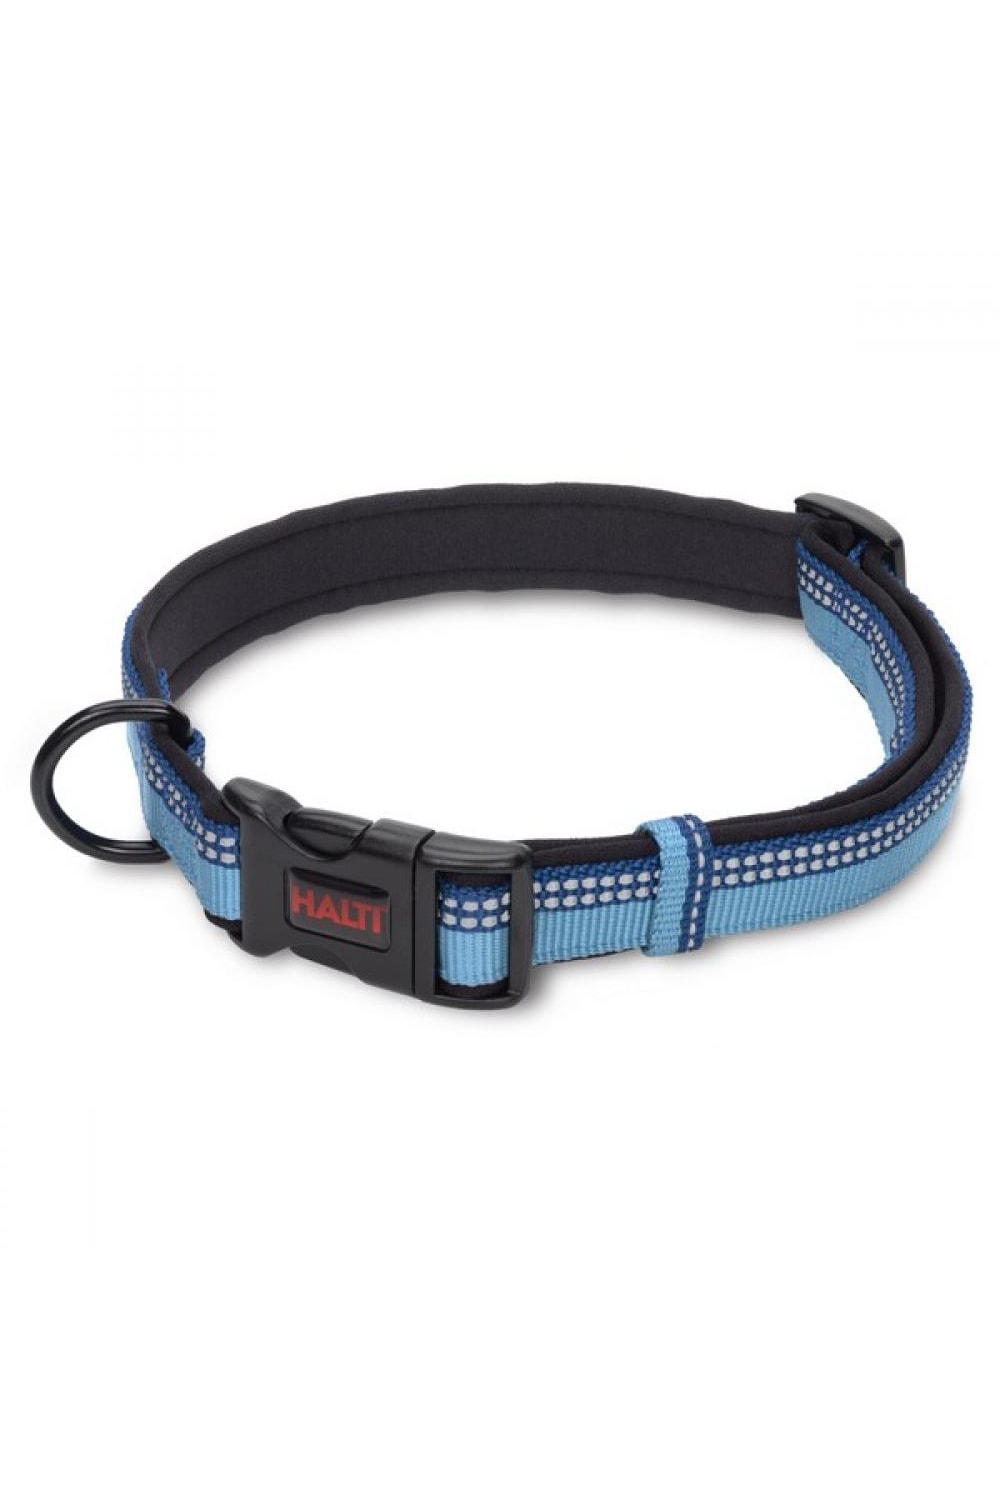 Company Of Animals Halti Dog Collar (Blue) (X Small)